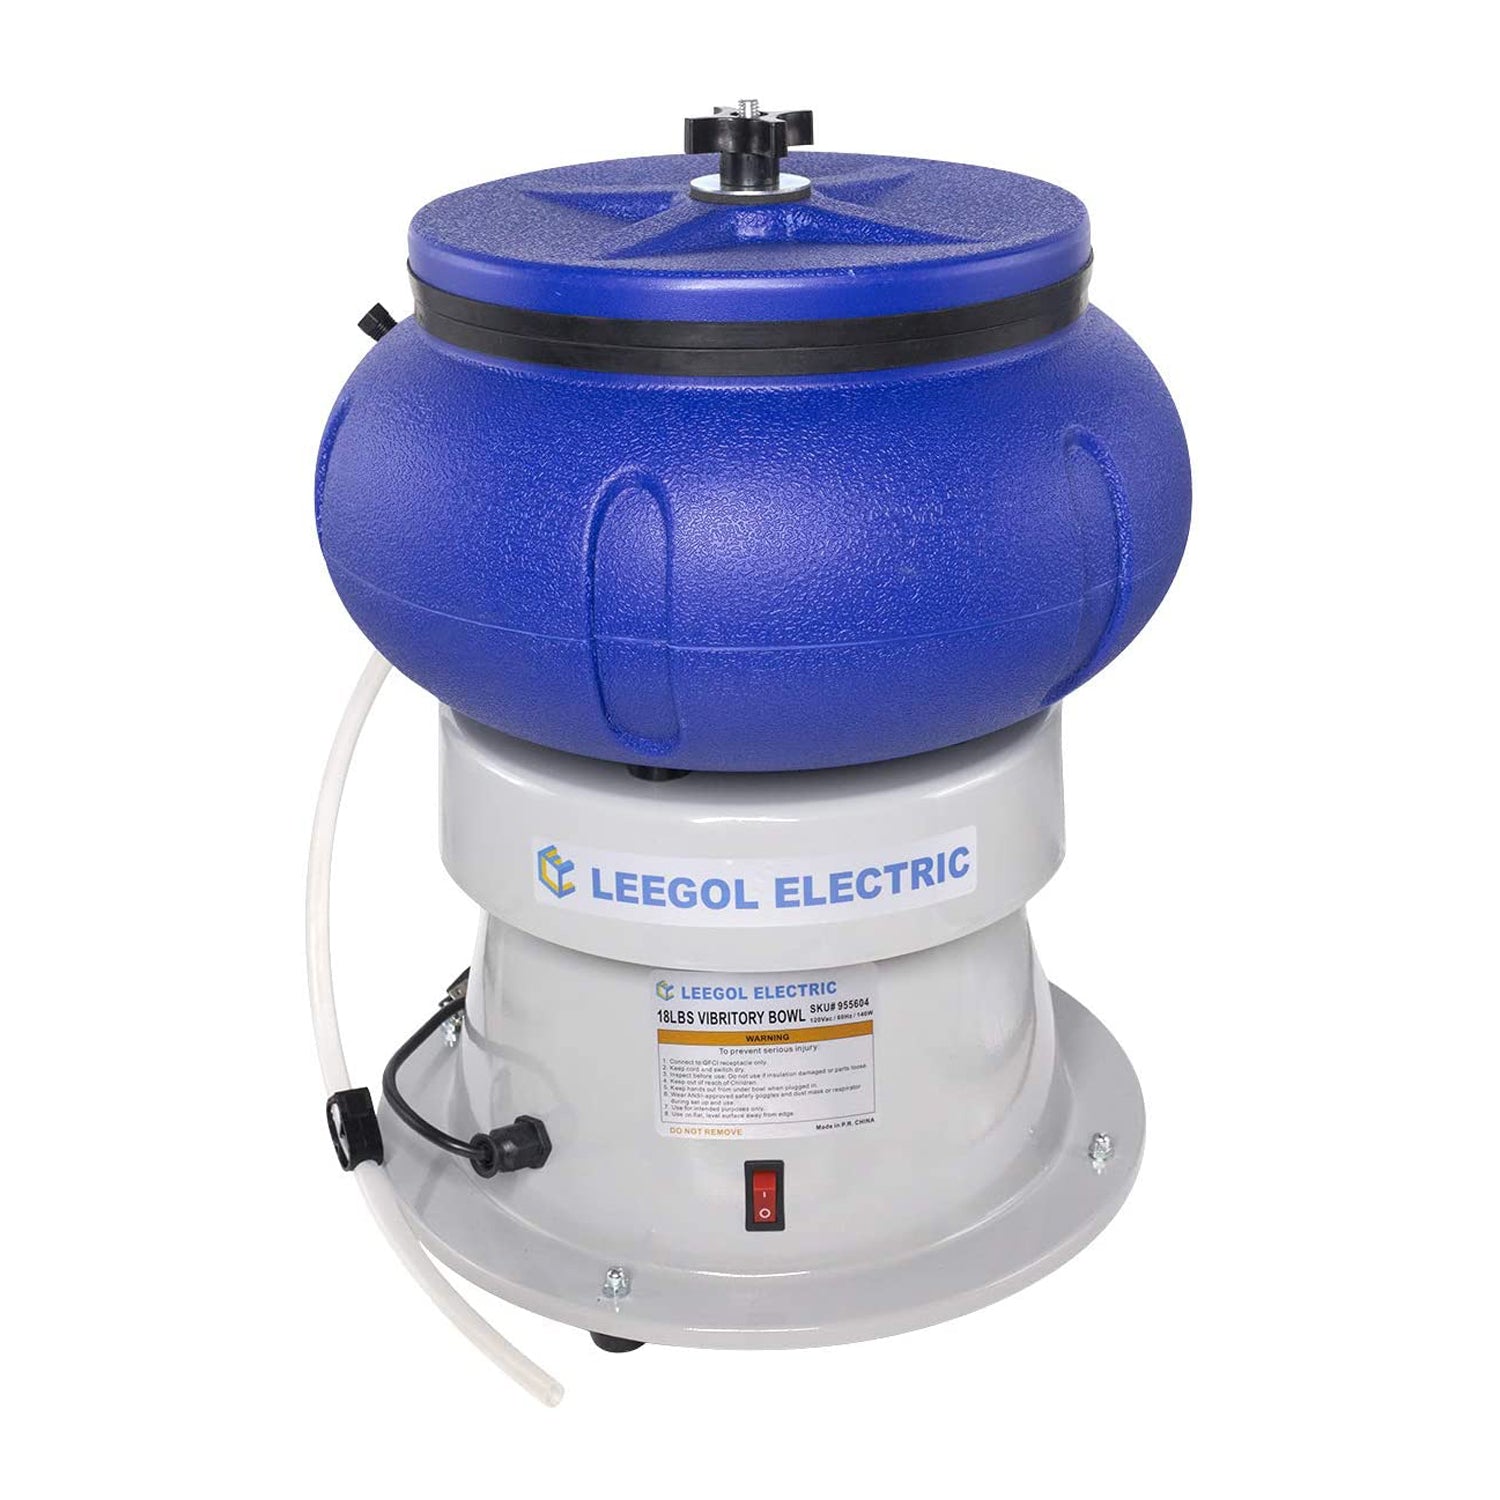 Leegol Electric Rock Tumbler 18 Lbs Vibratory Tumbler Bowl for Polishing Metal - LeegolElectric